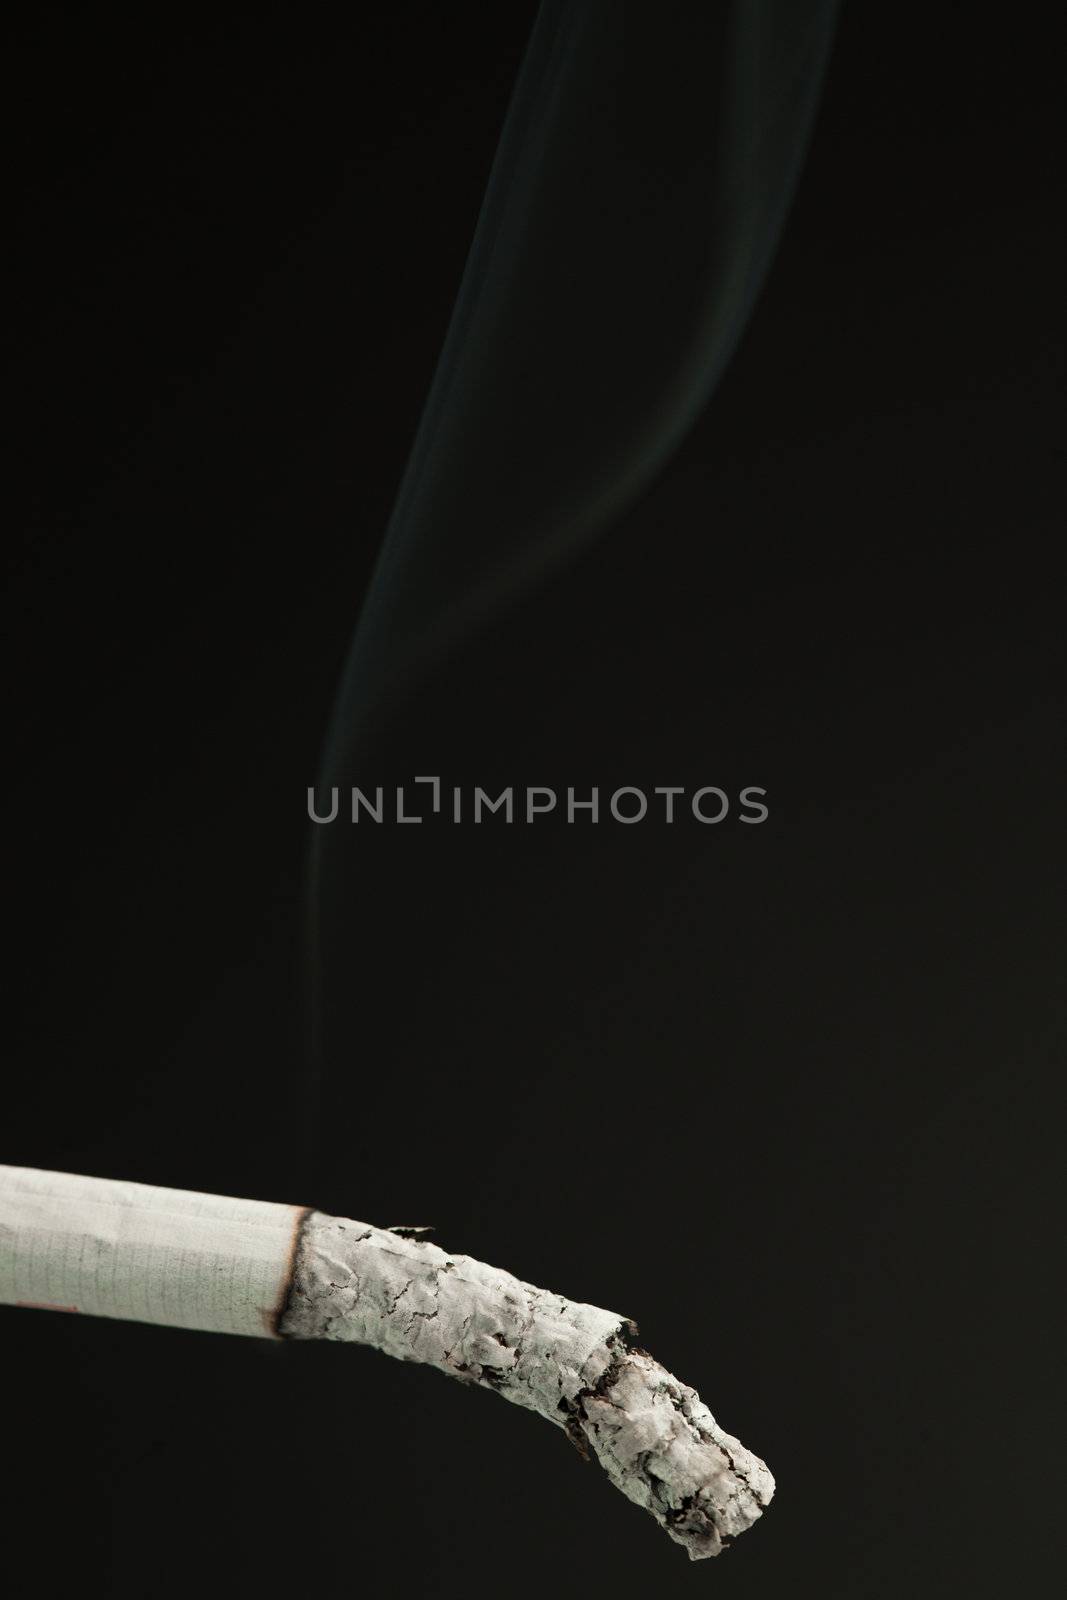 Ash of cigarette against a black background